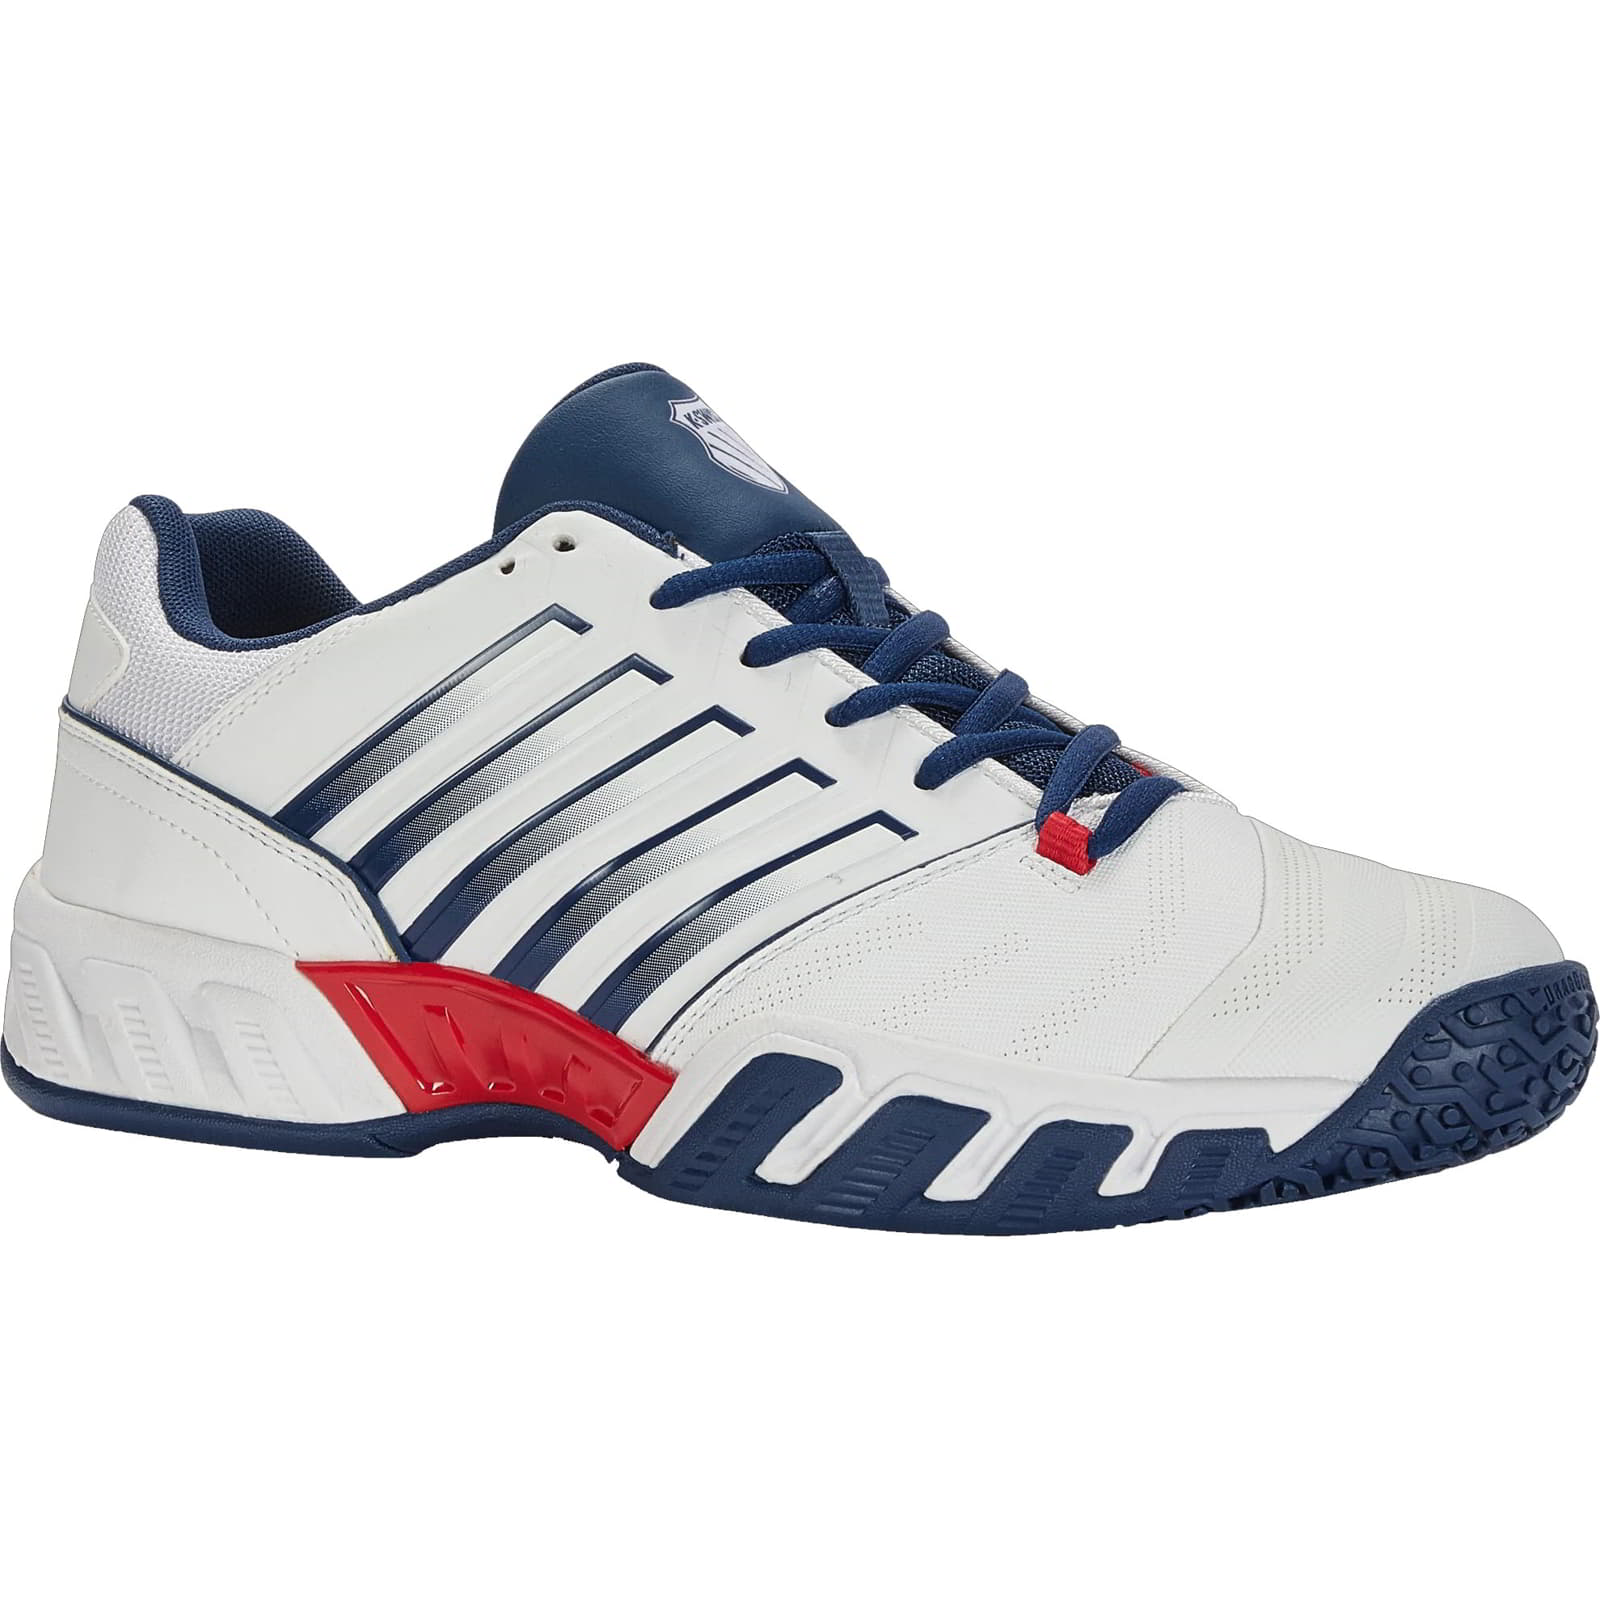 K-Swiss Bigshot Light 4 Omni Tennis Shoes Trainers - UK 10.5